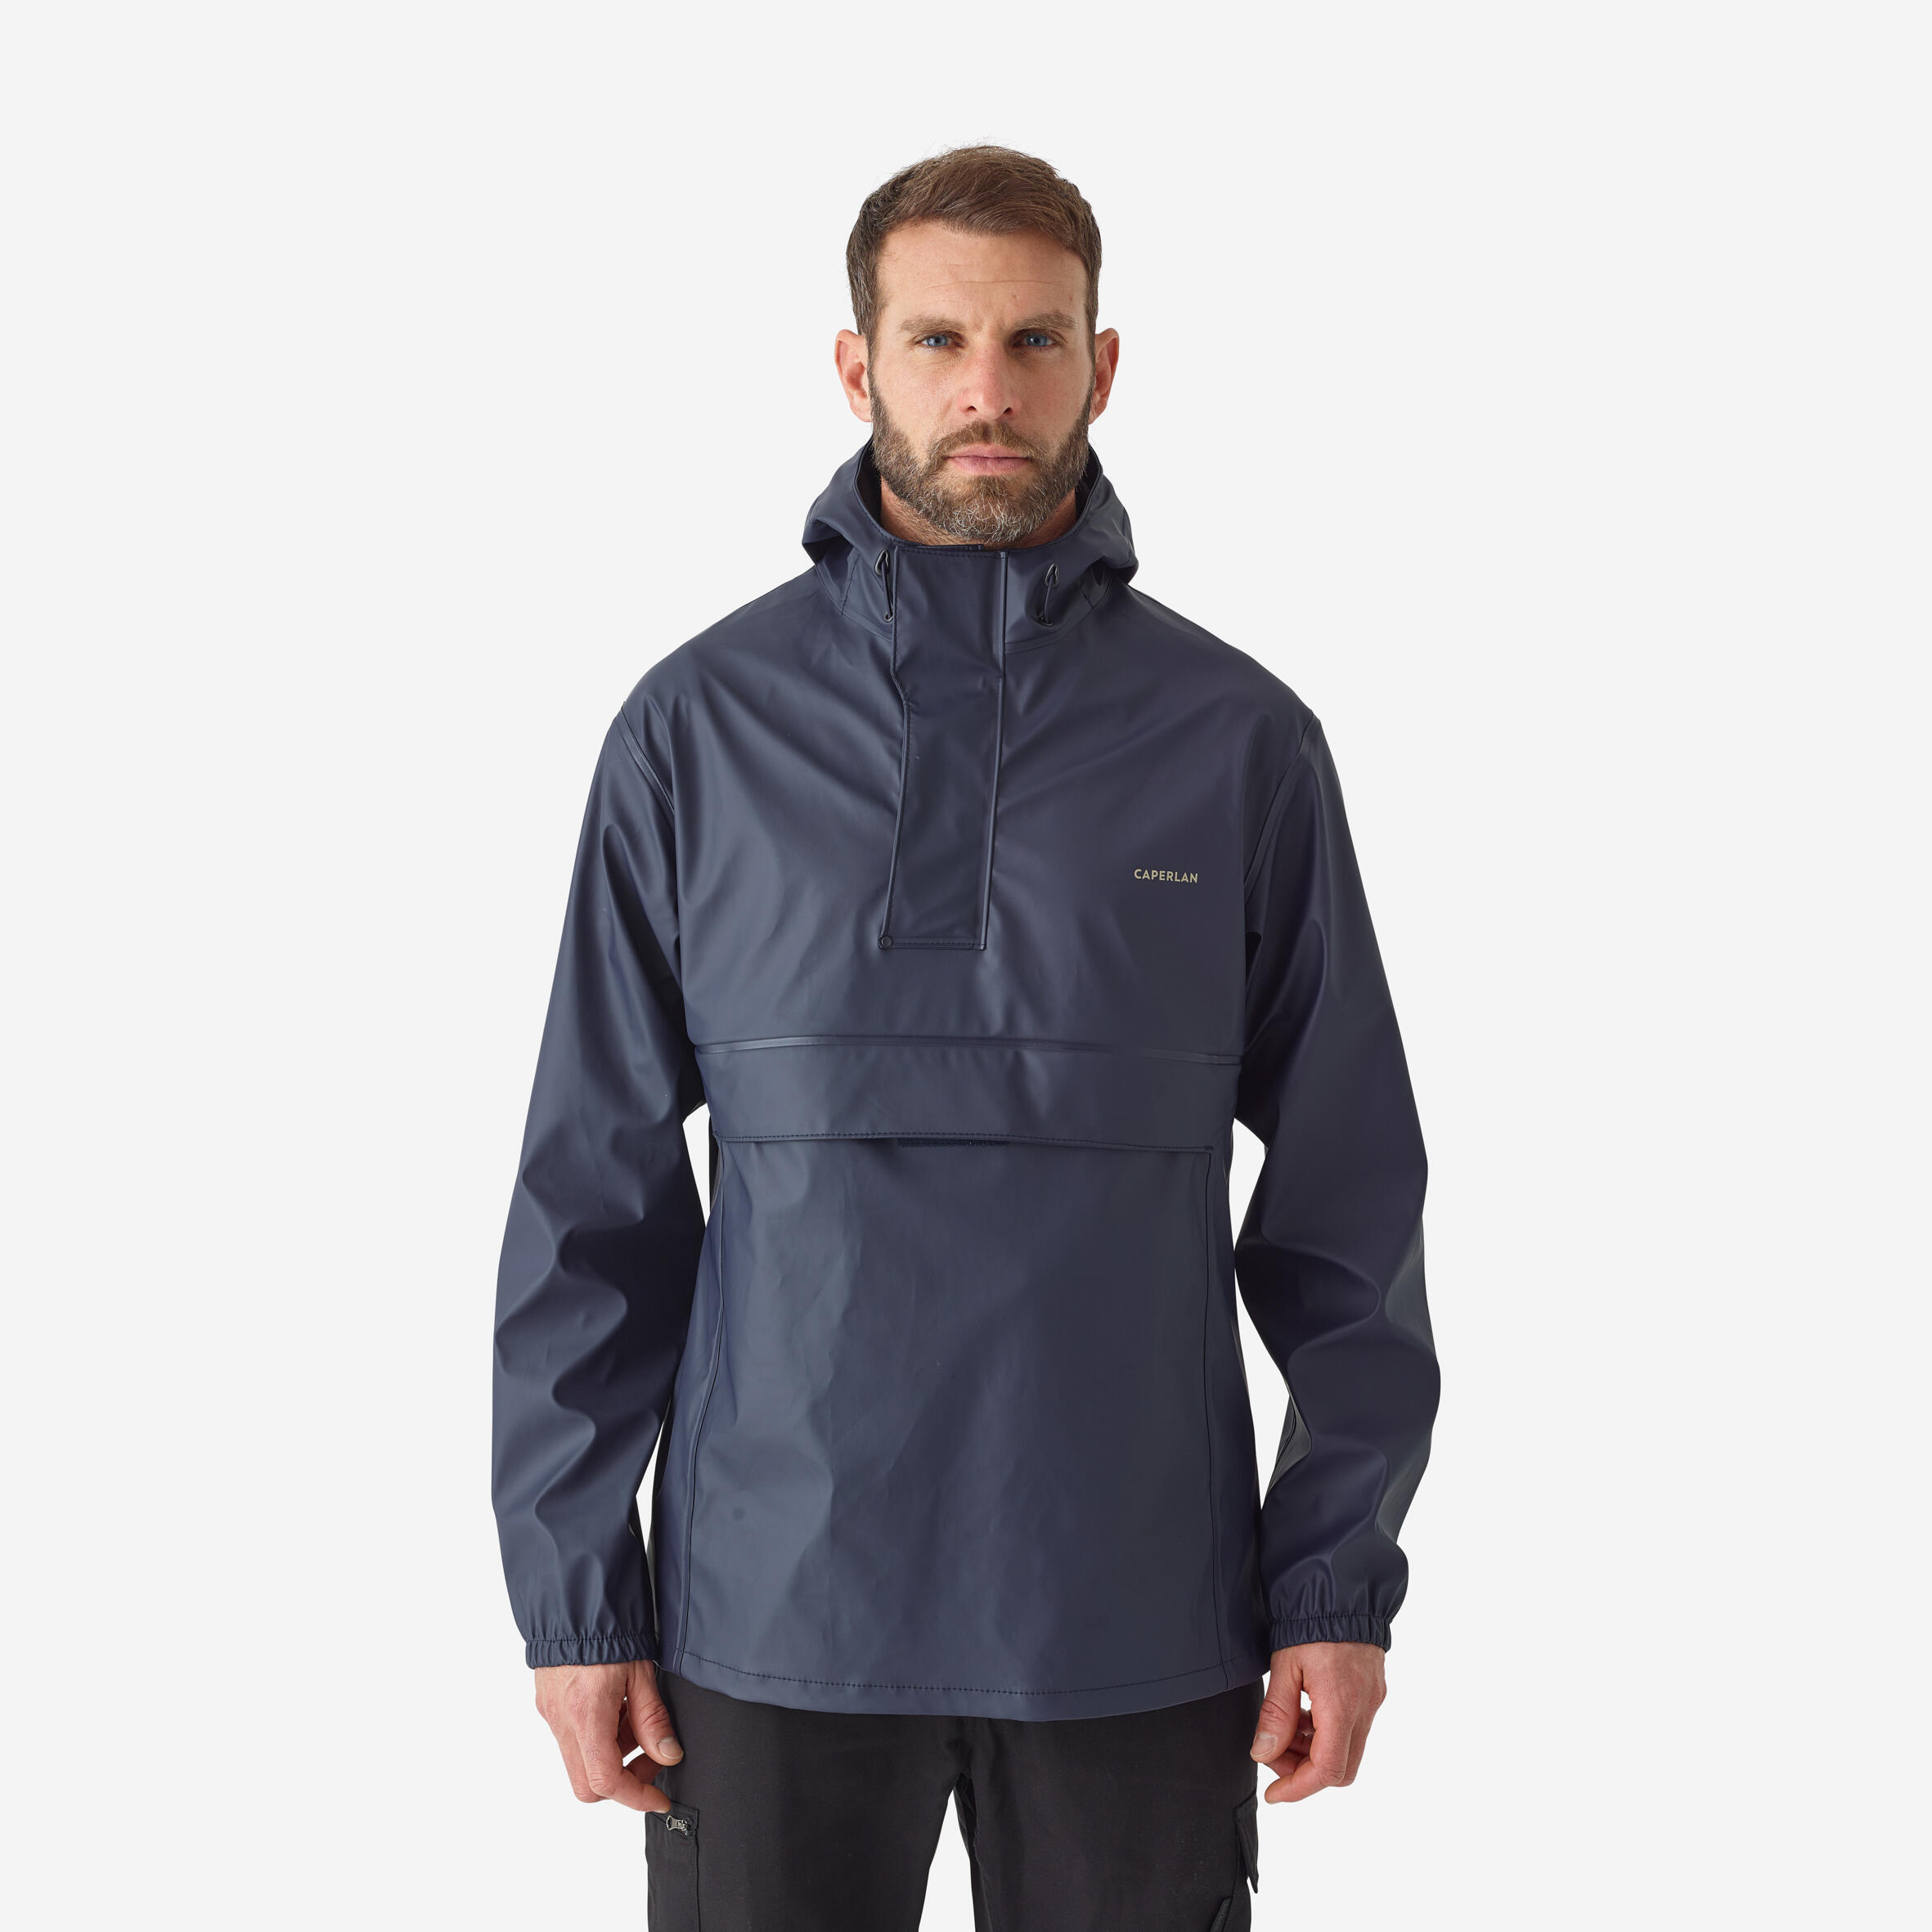 CAPERLAN Fishing waterproof poncho/jacket - FP 500 blue